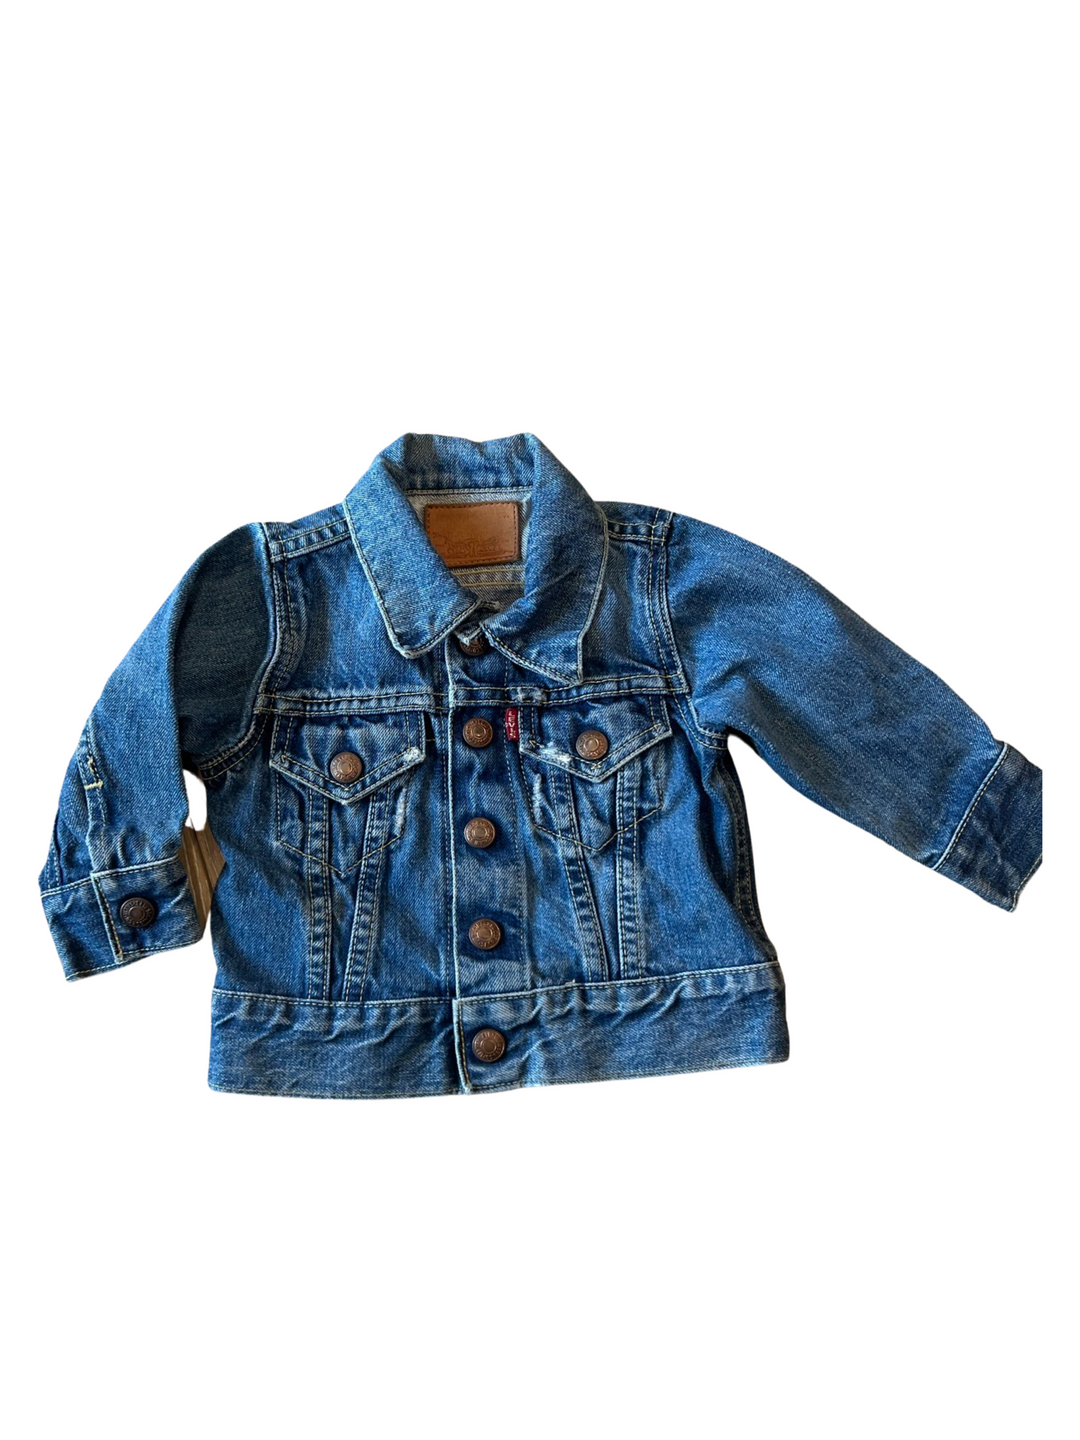 Levi's Embroidery Jacket